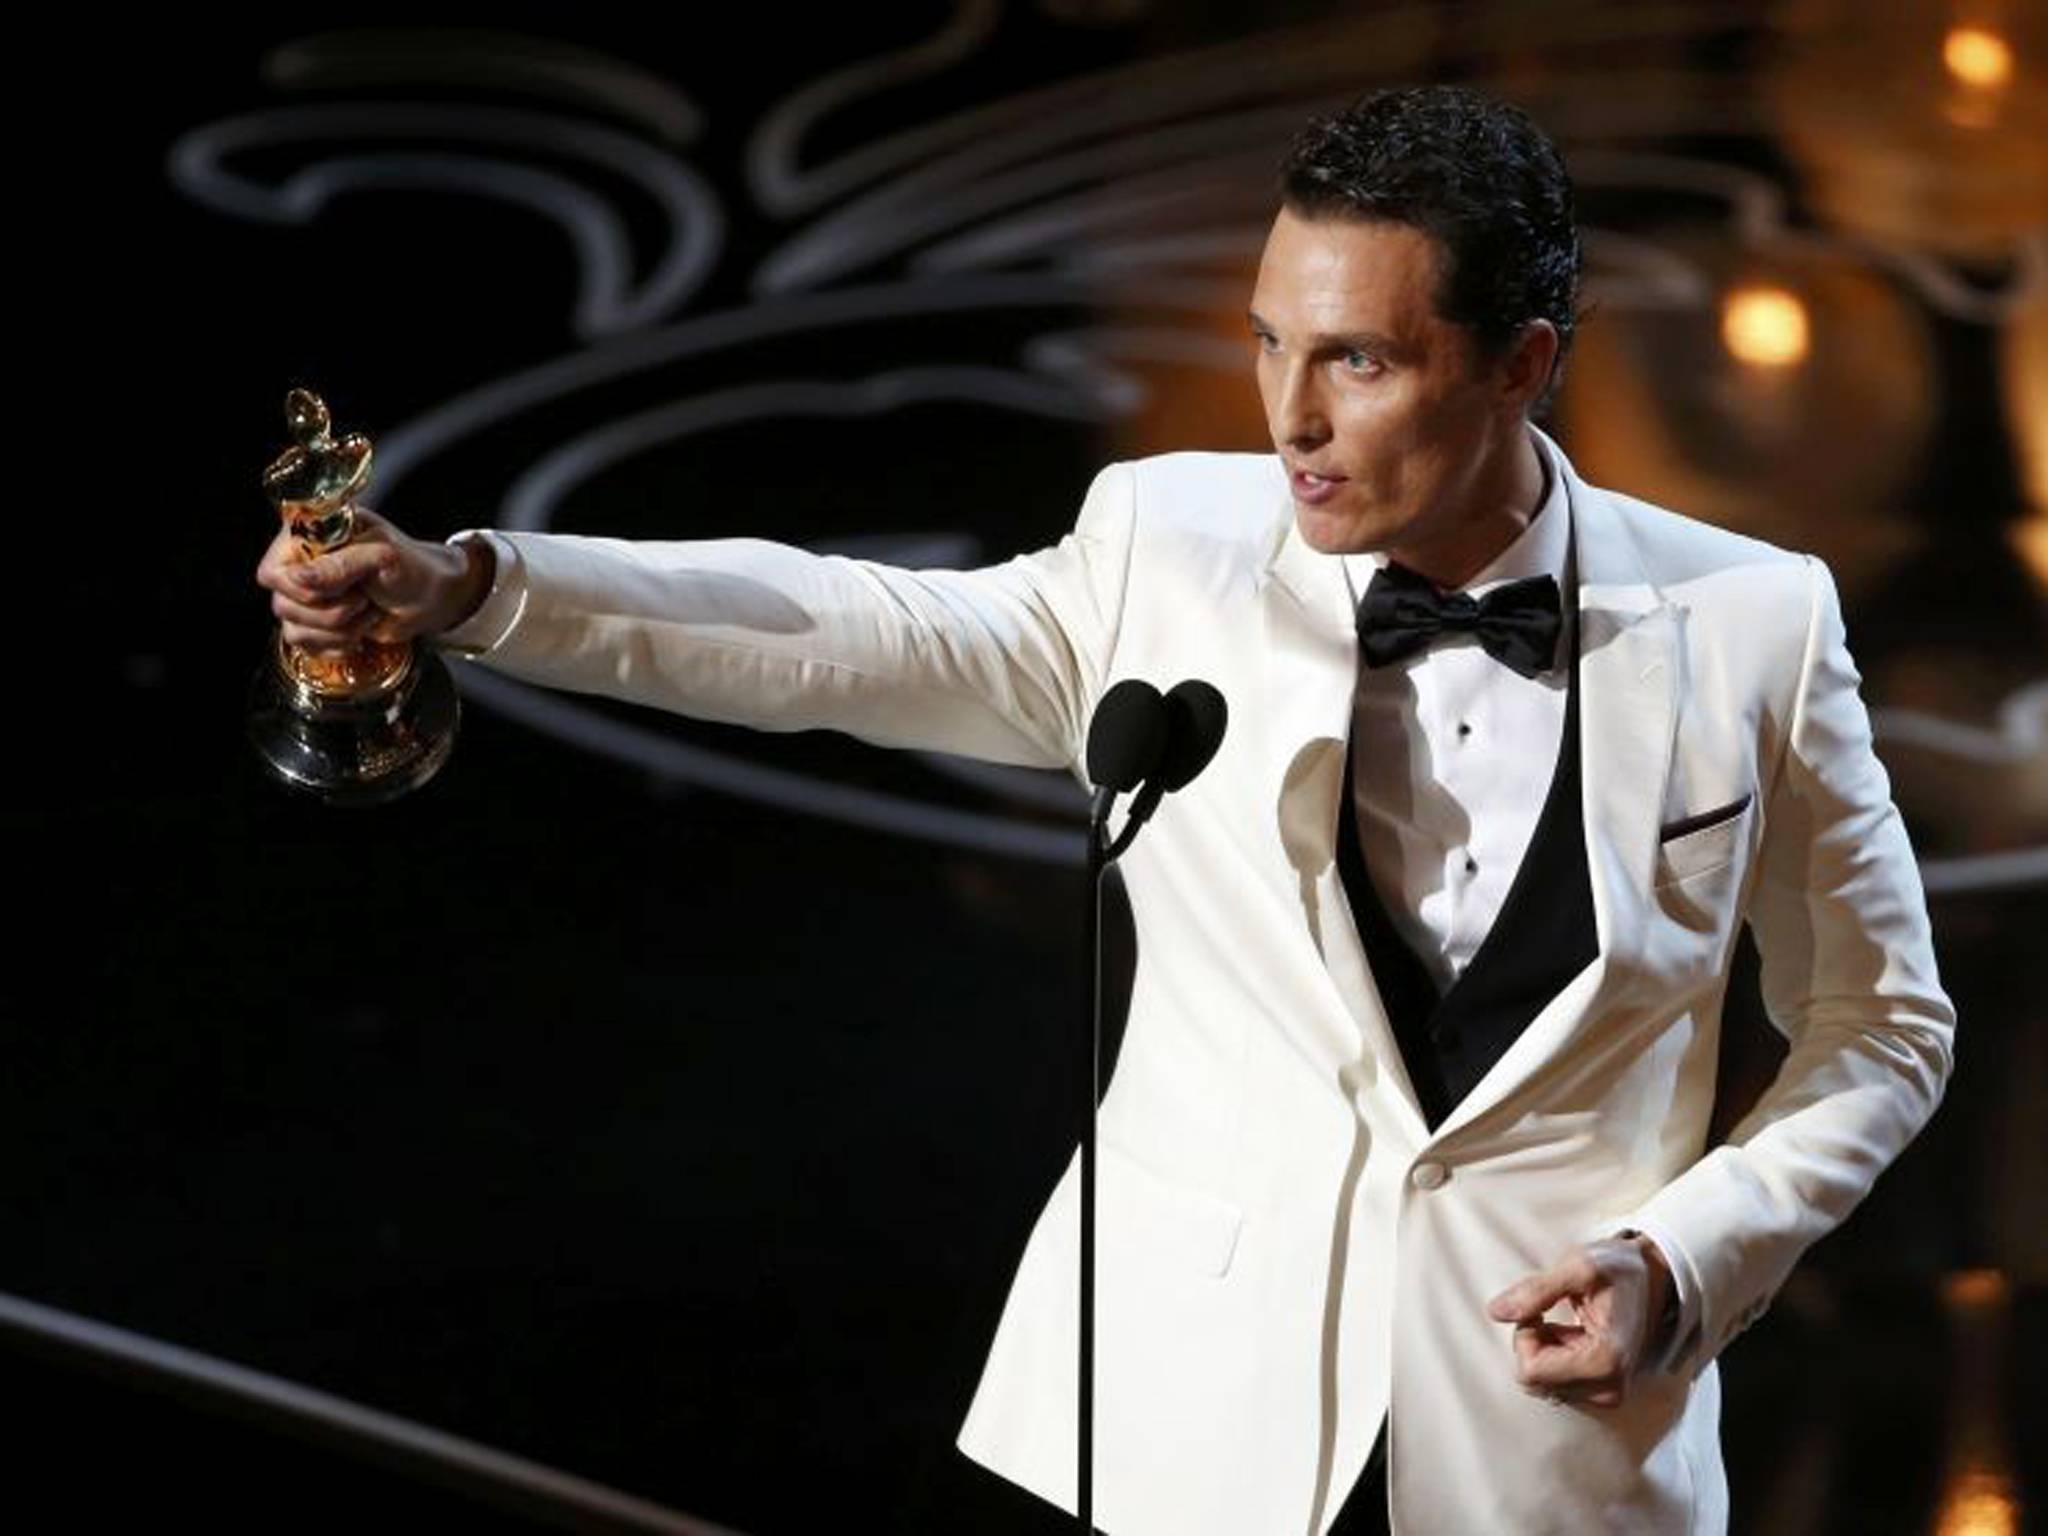 Matthew McConaughey winning the Best Actor Oscar award in 2014